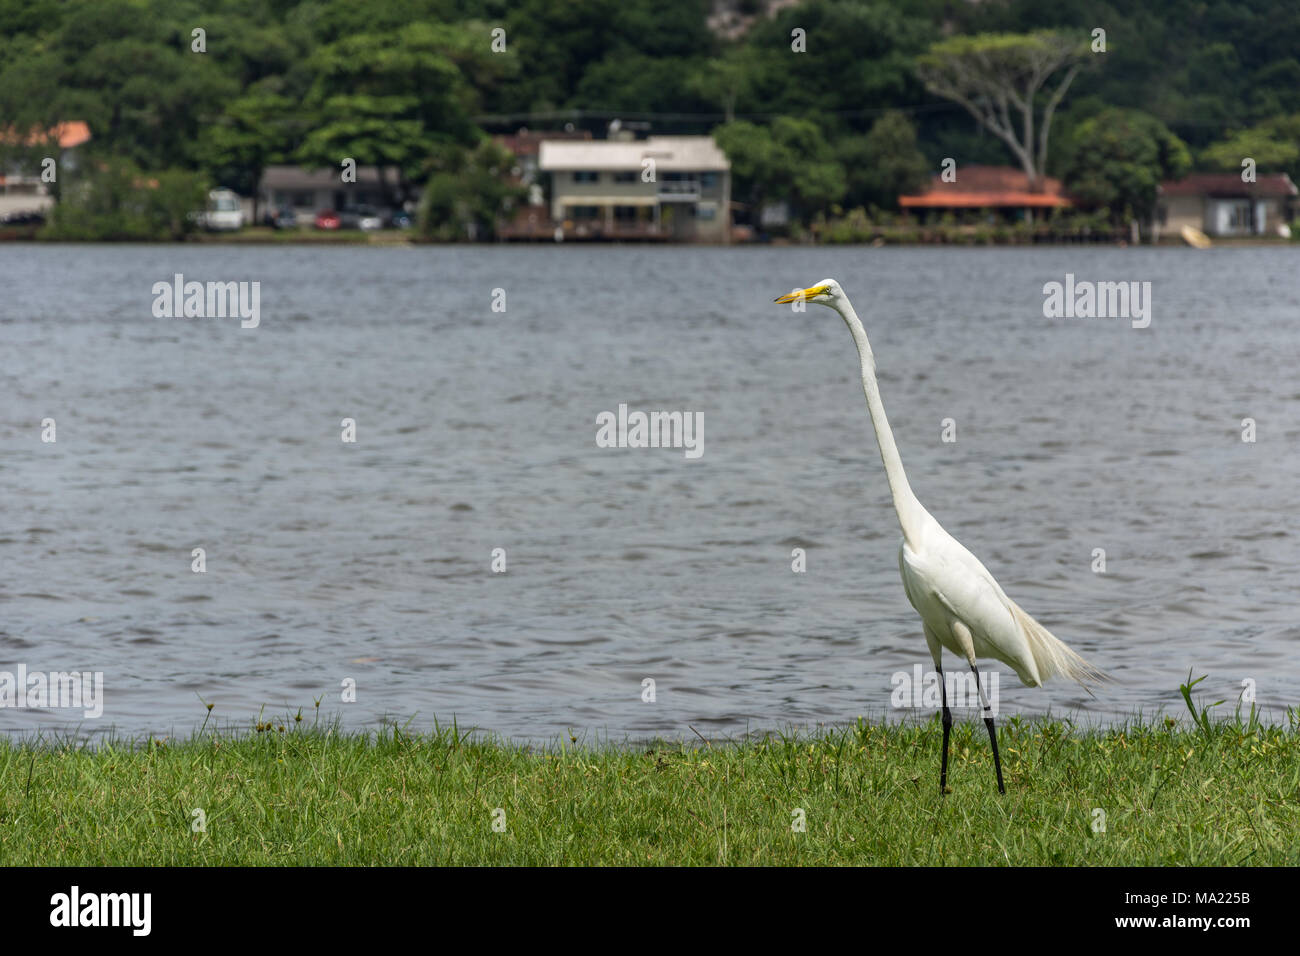 Florianopolis, Brazil. Februry, 2018. White heron walking near a lake (Lagoa da Conceicao). Stock Photo